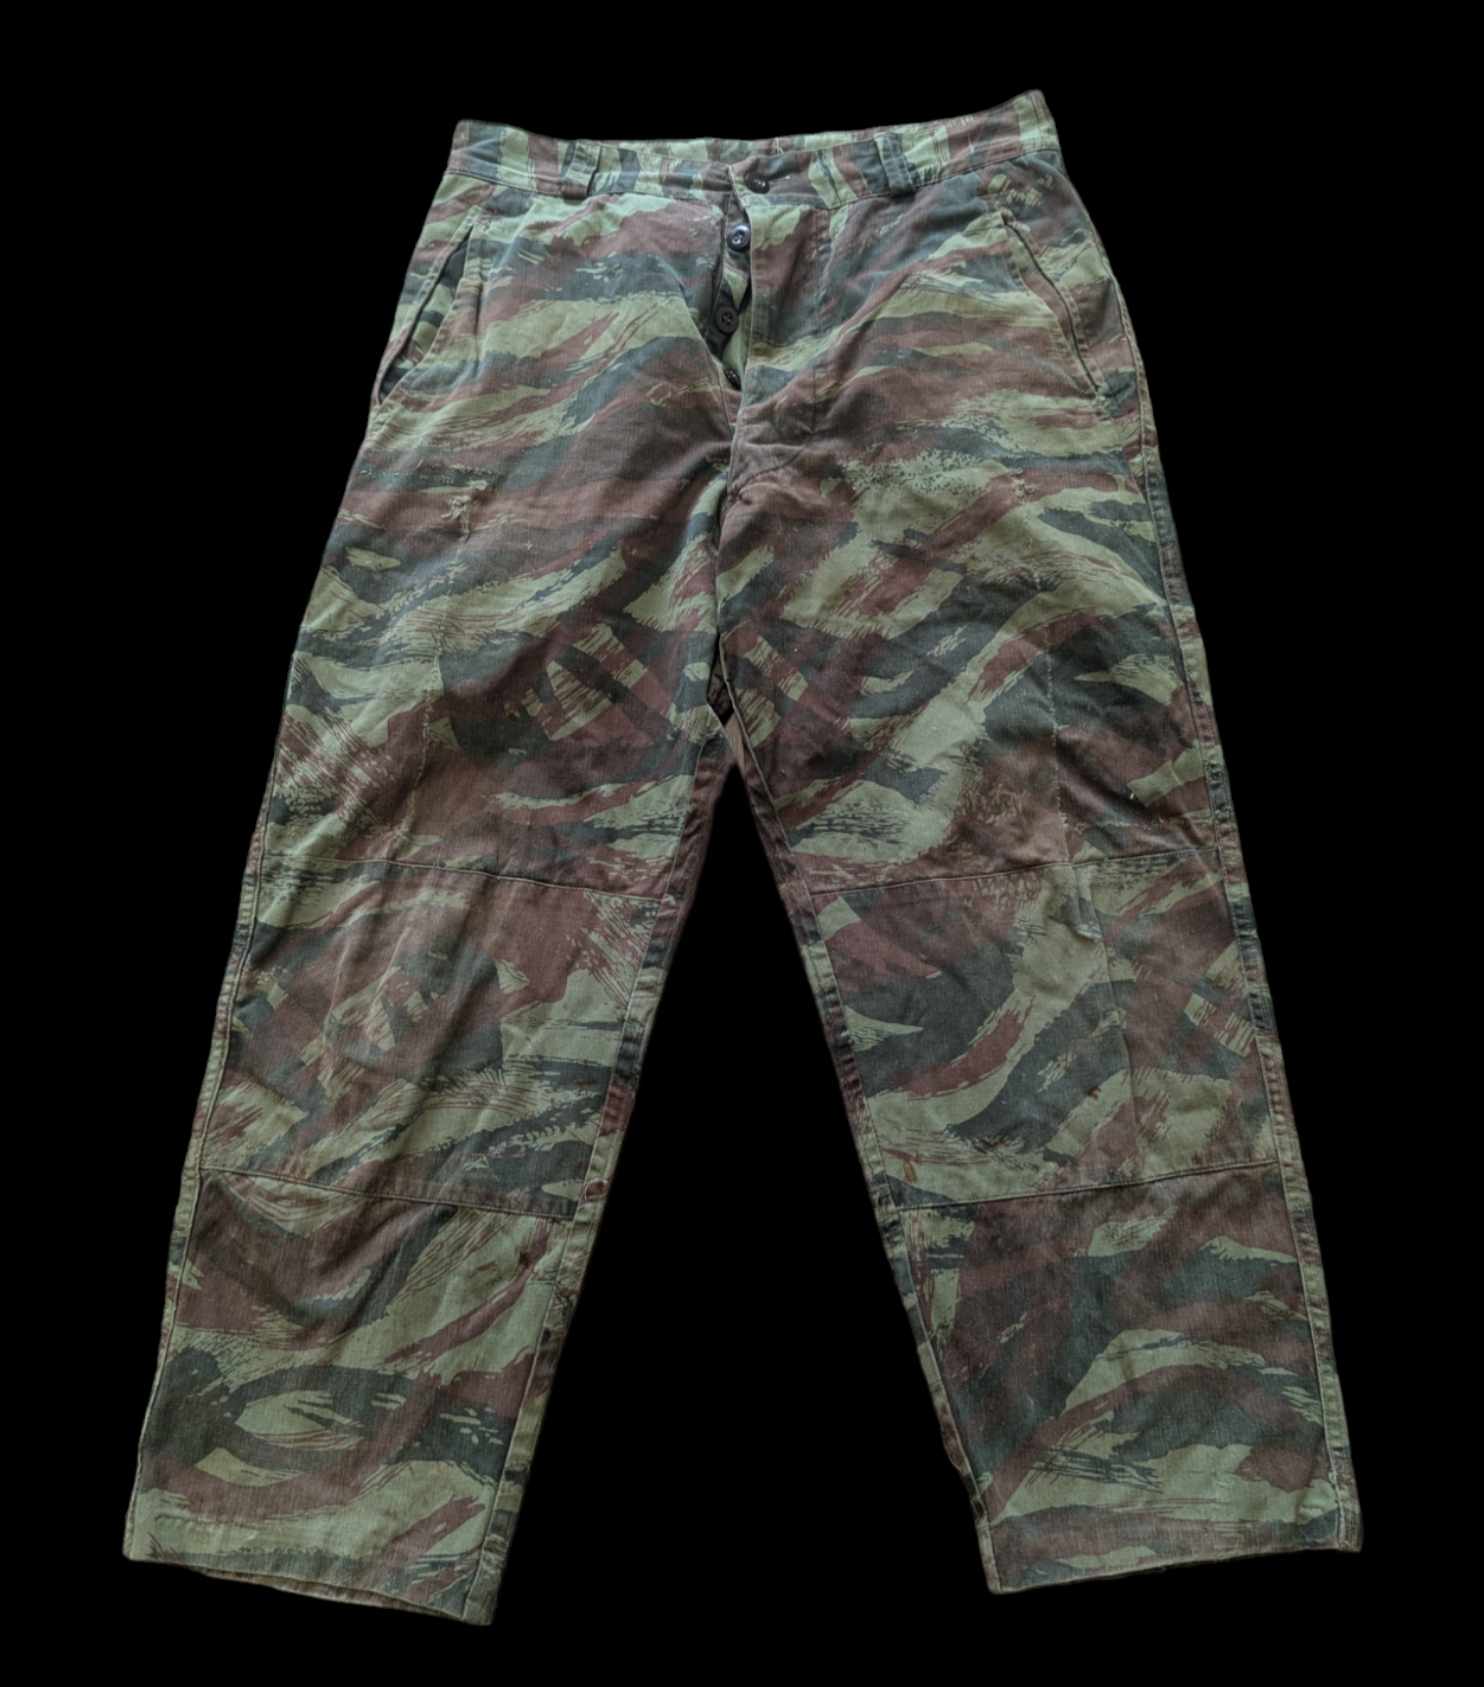 militaria : Pantalon TTA 47-56 camouflé / TTA 47-56 camouflage pants